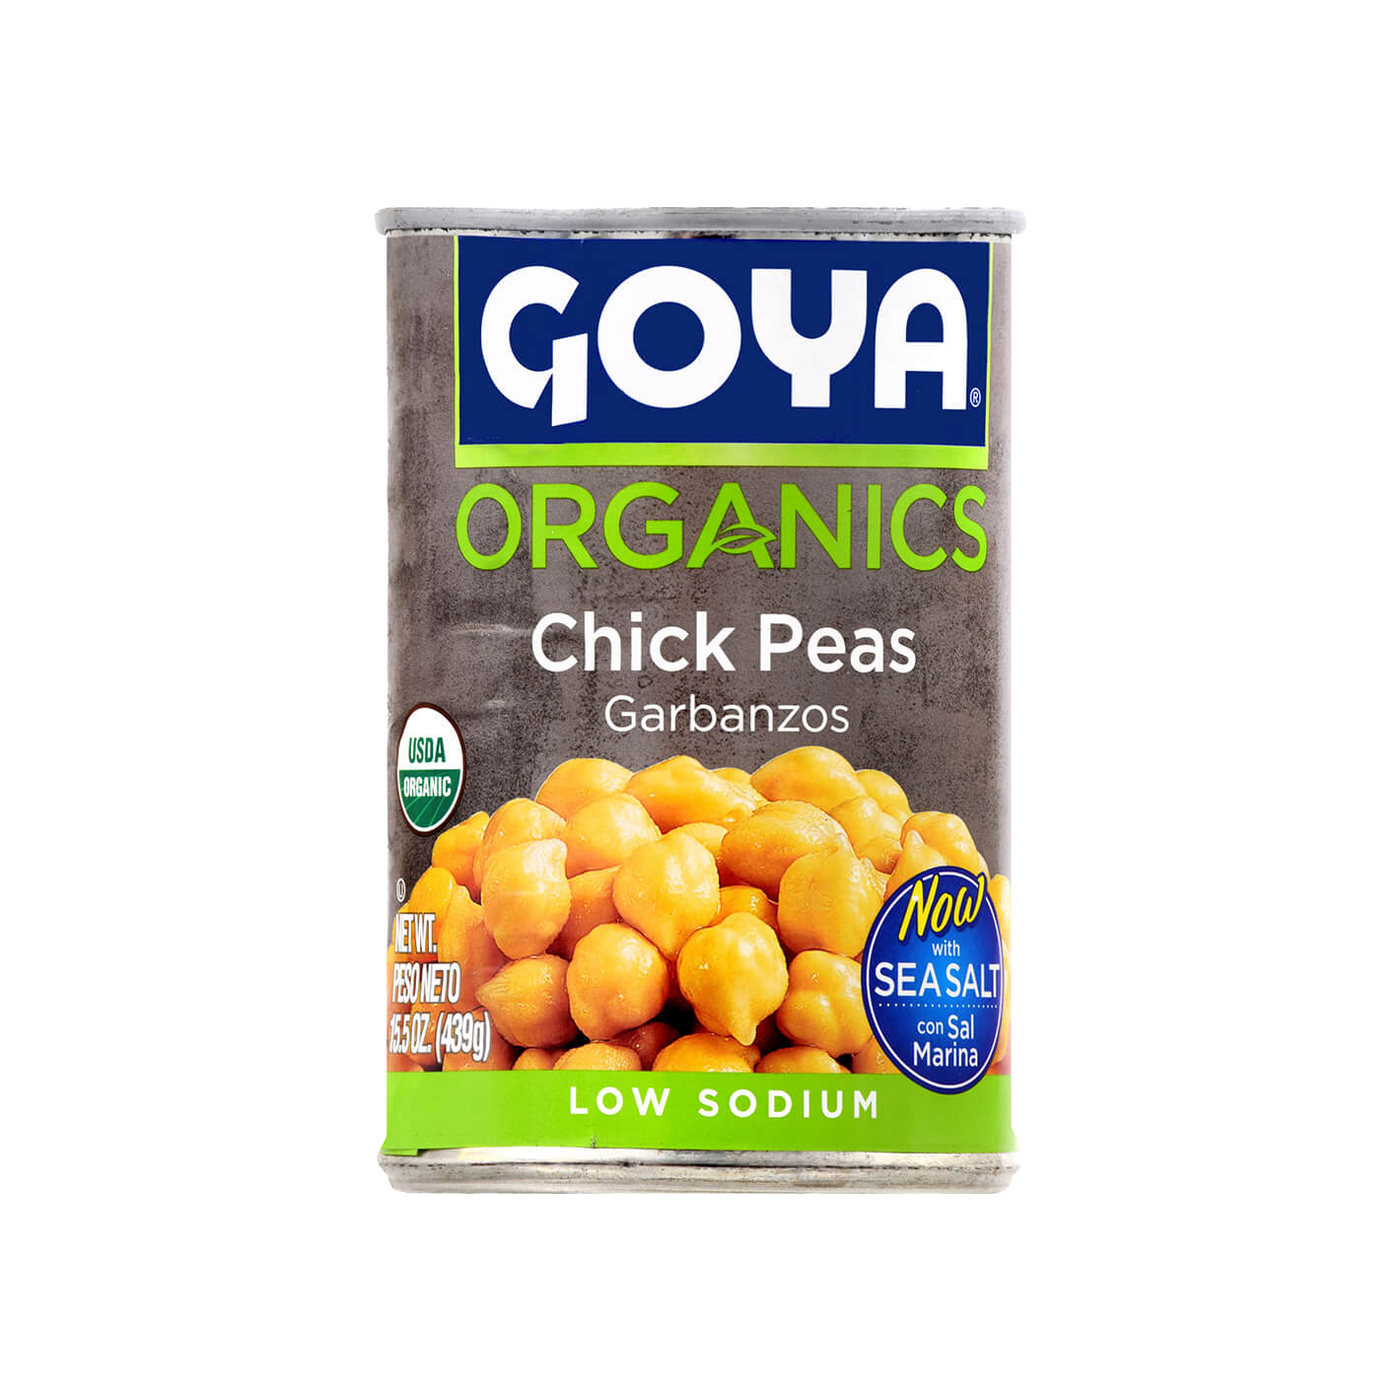   Goya Organic Chick Peas